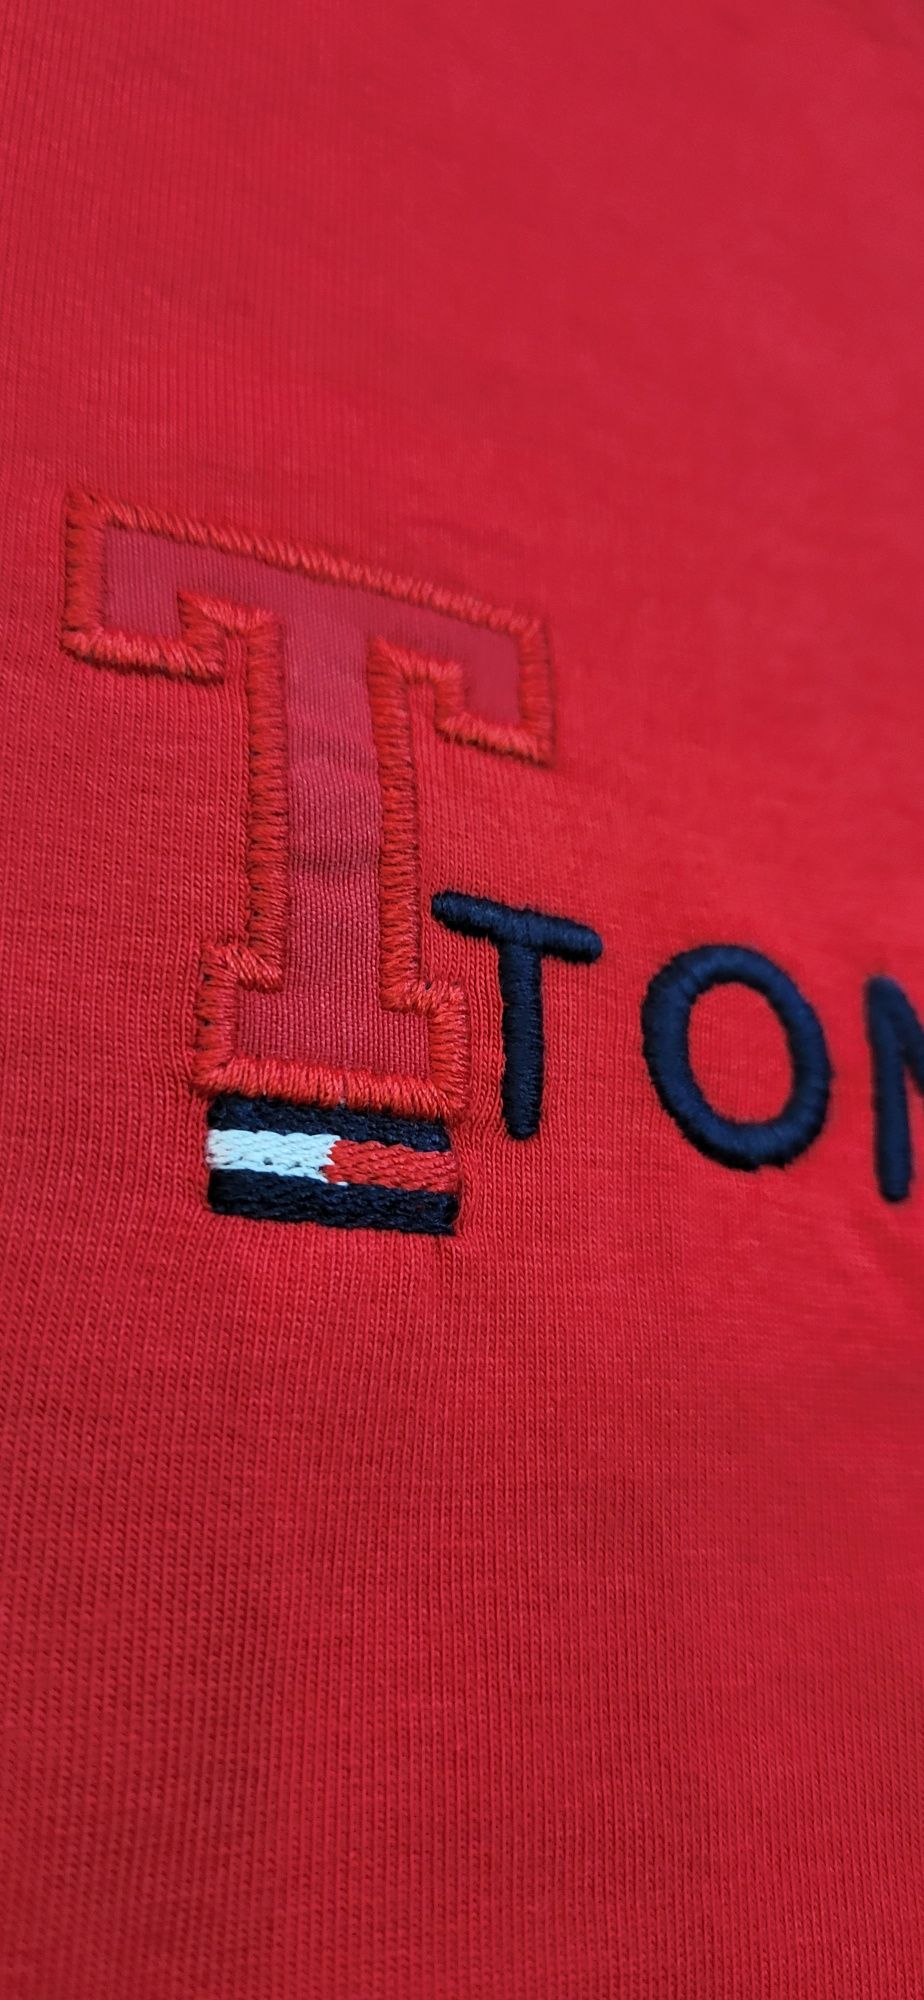 TH Tommy 2 koszulki męskie t-shirt czerwona granat L premium